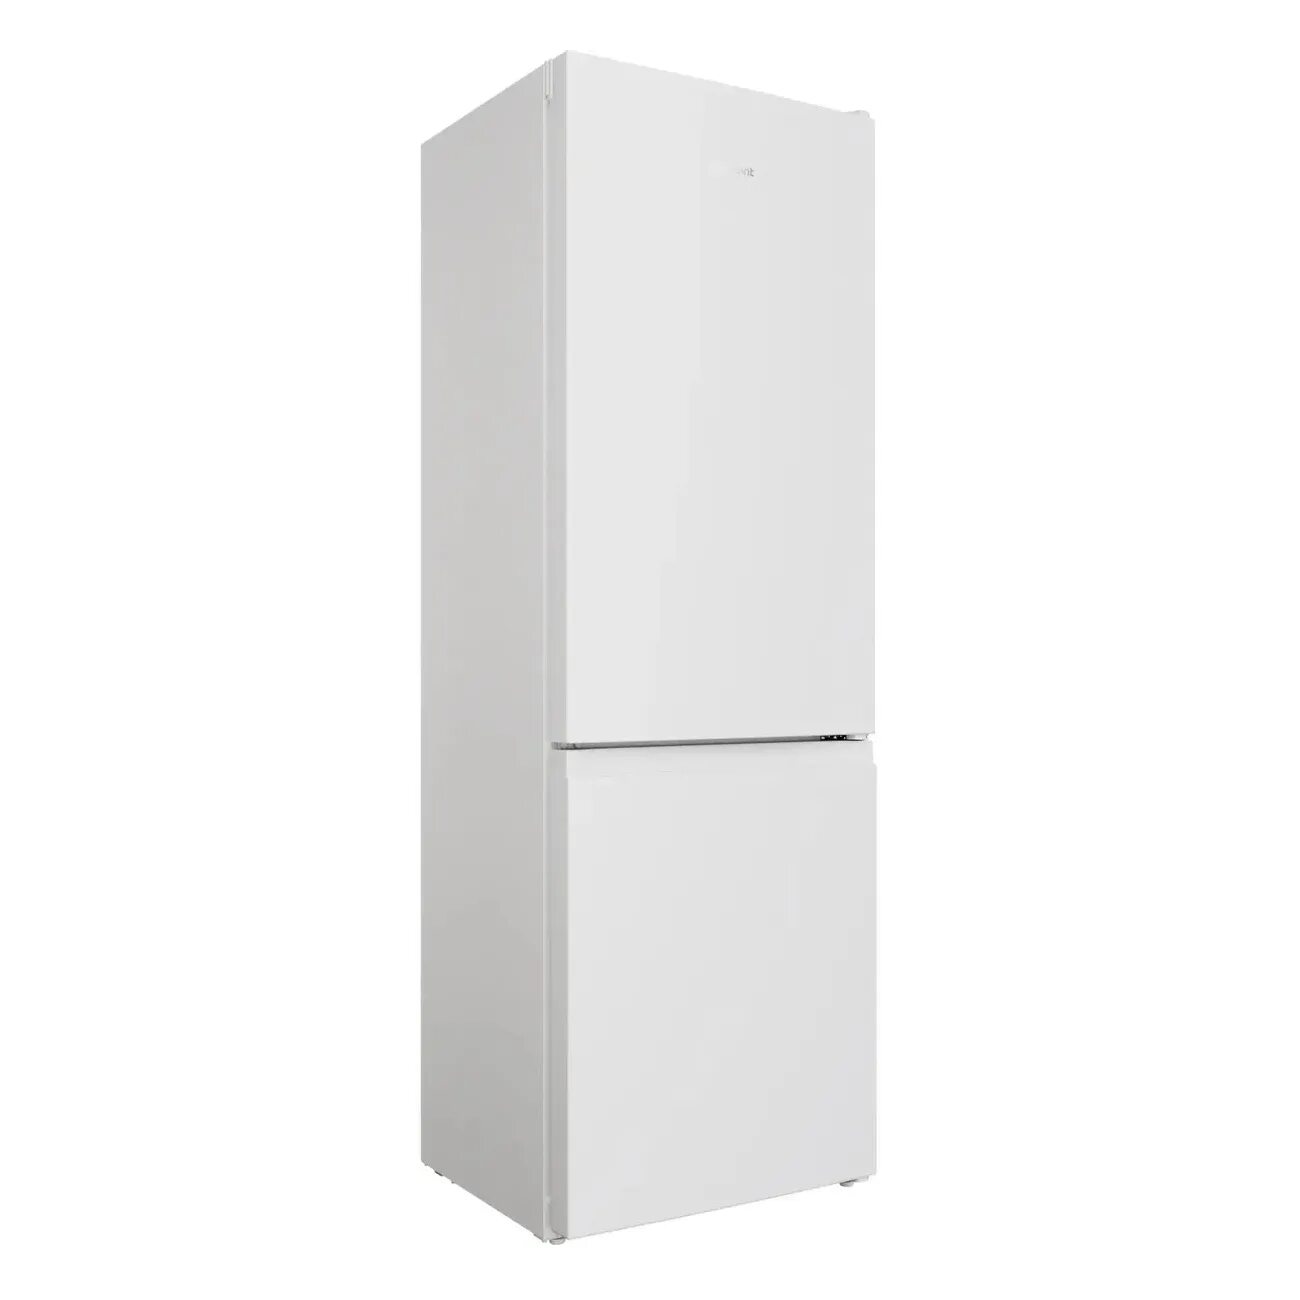 Холодильник Kuppersberg NFM 200 C. Холодильник Haier cef535awg. Hotpoint ariston 4180 w